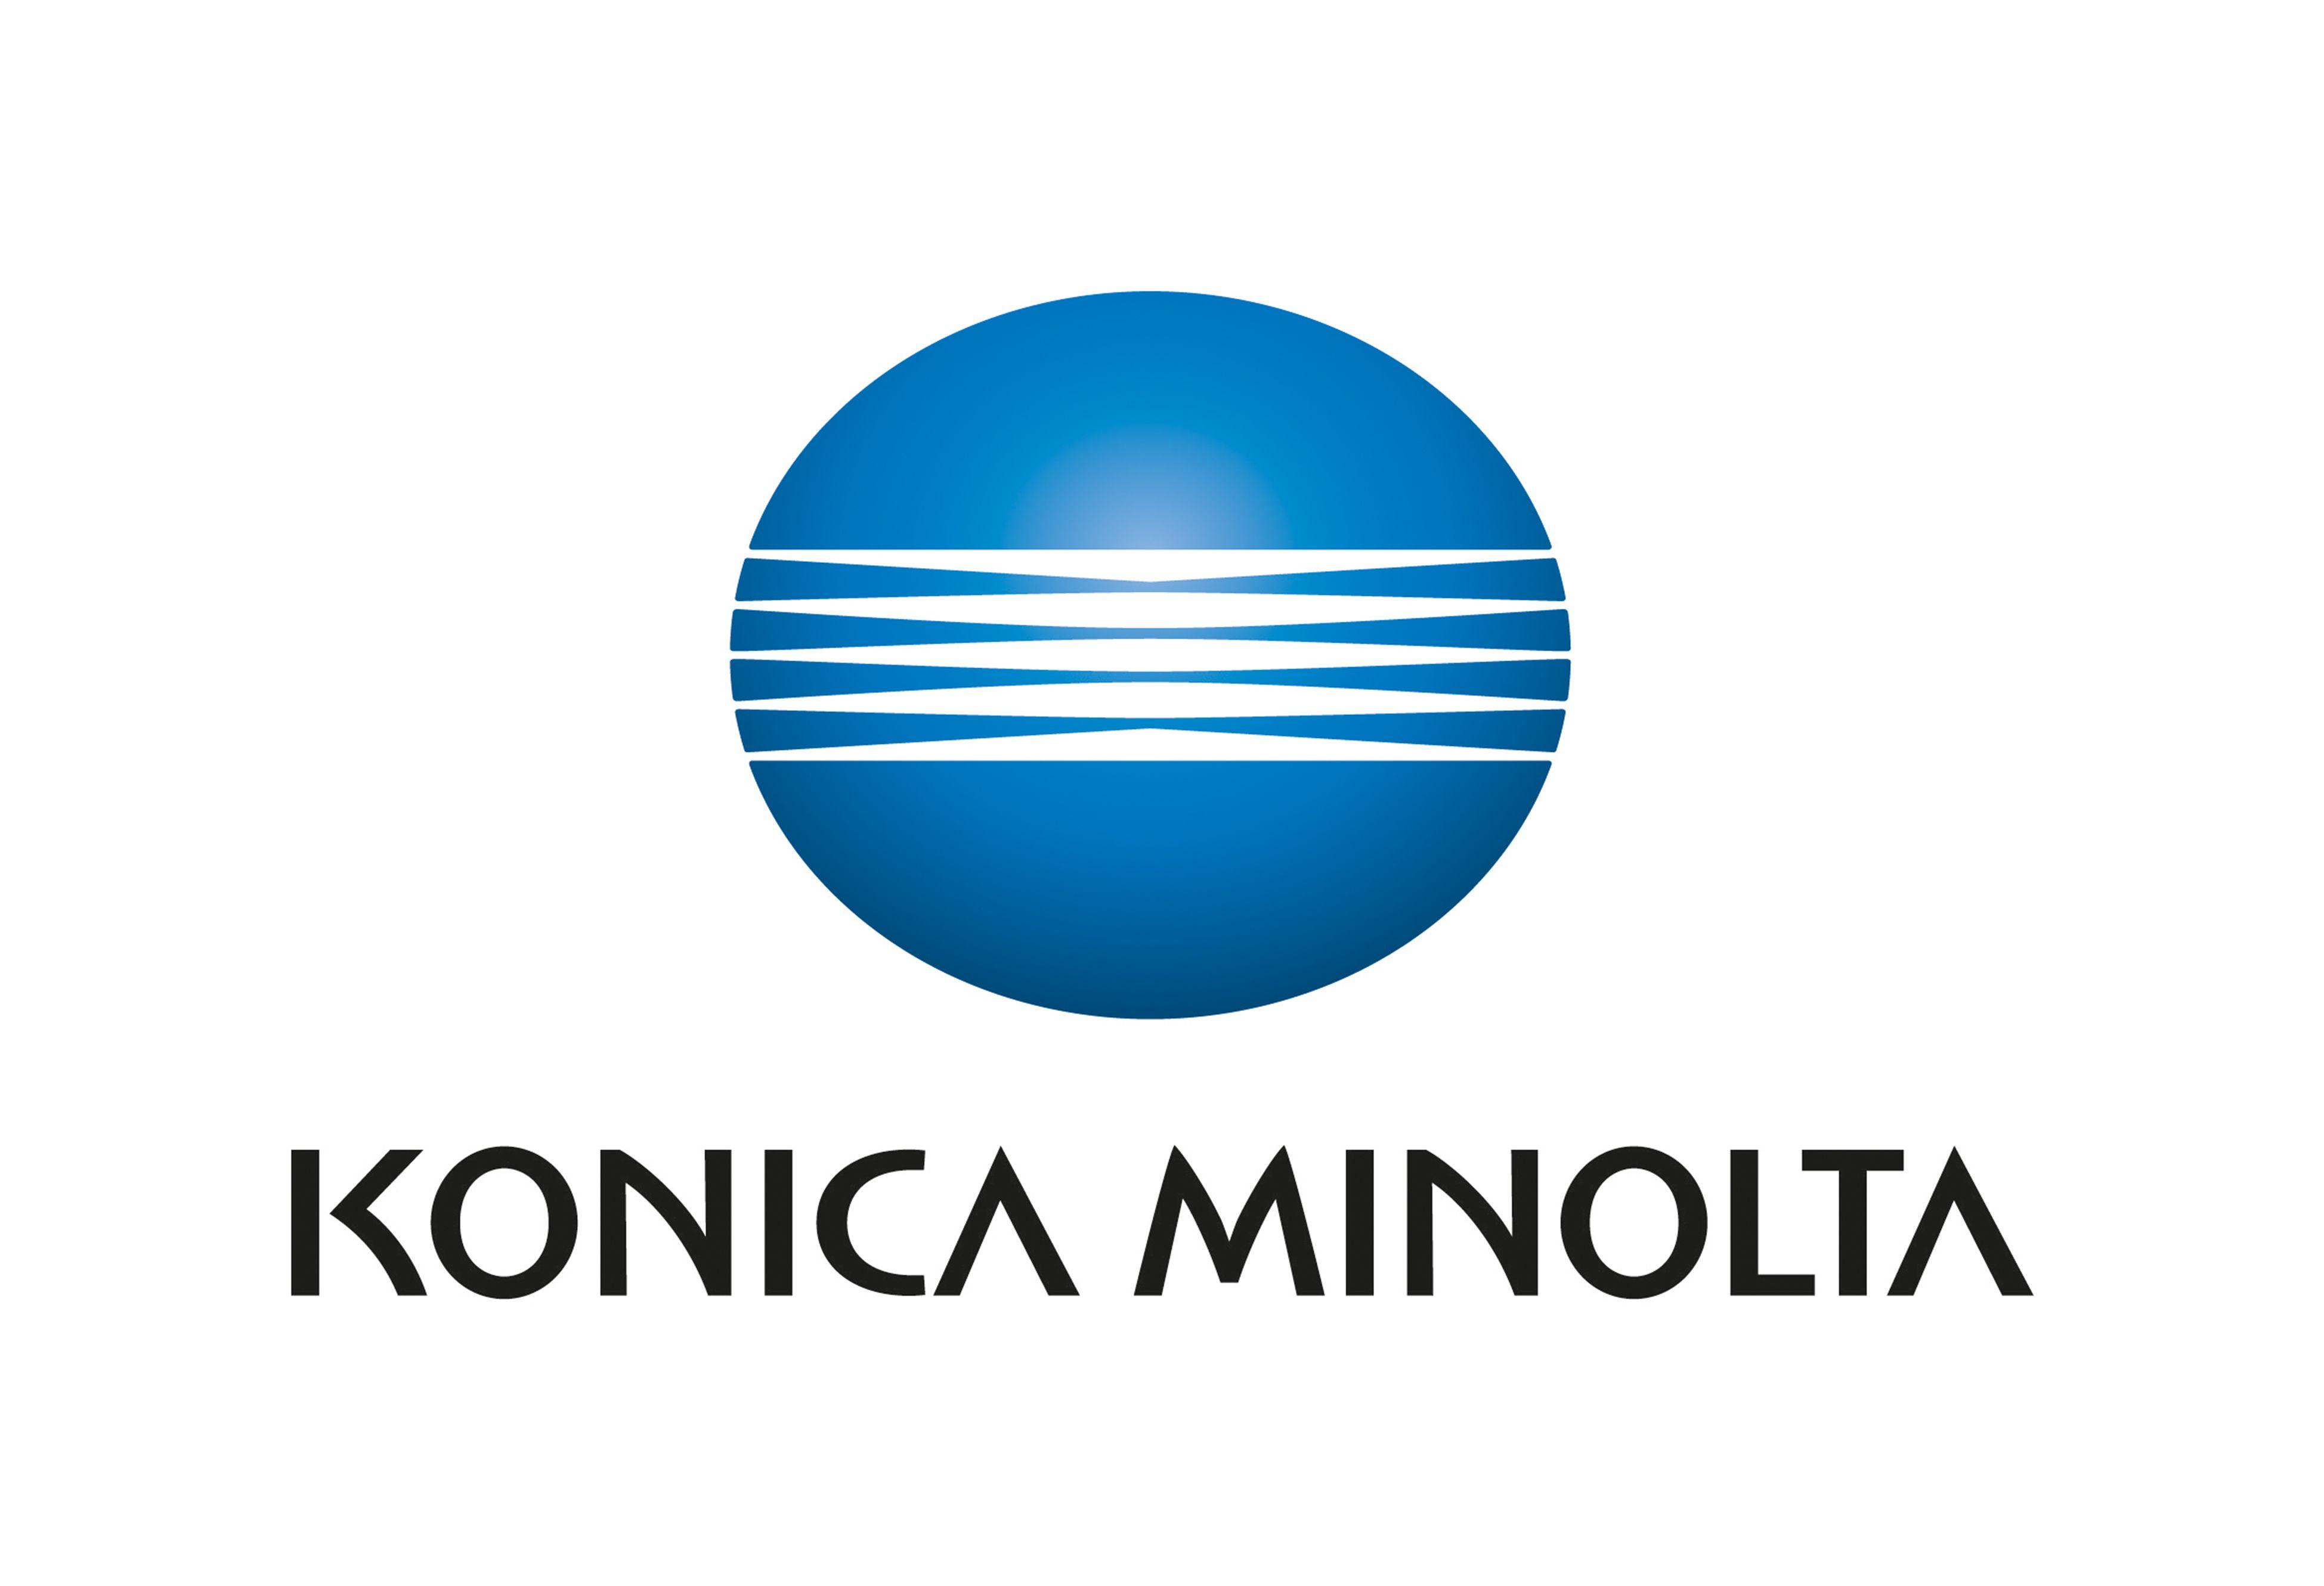 Bizhub Logo - Konica Minolta Announces Digital Workhorse bizhub PRO 1100